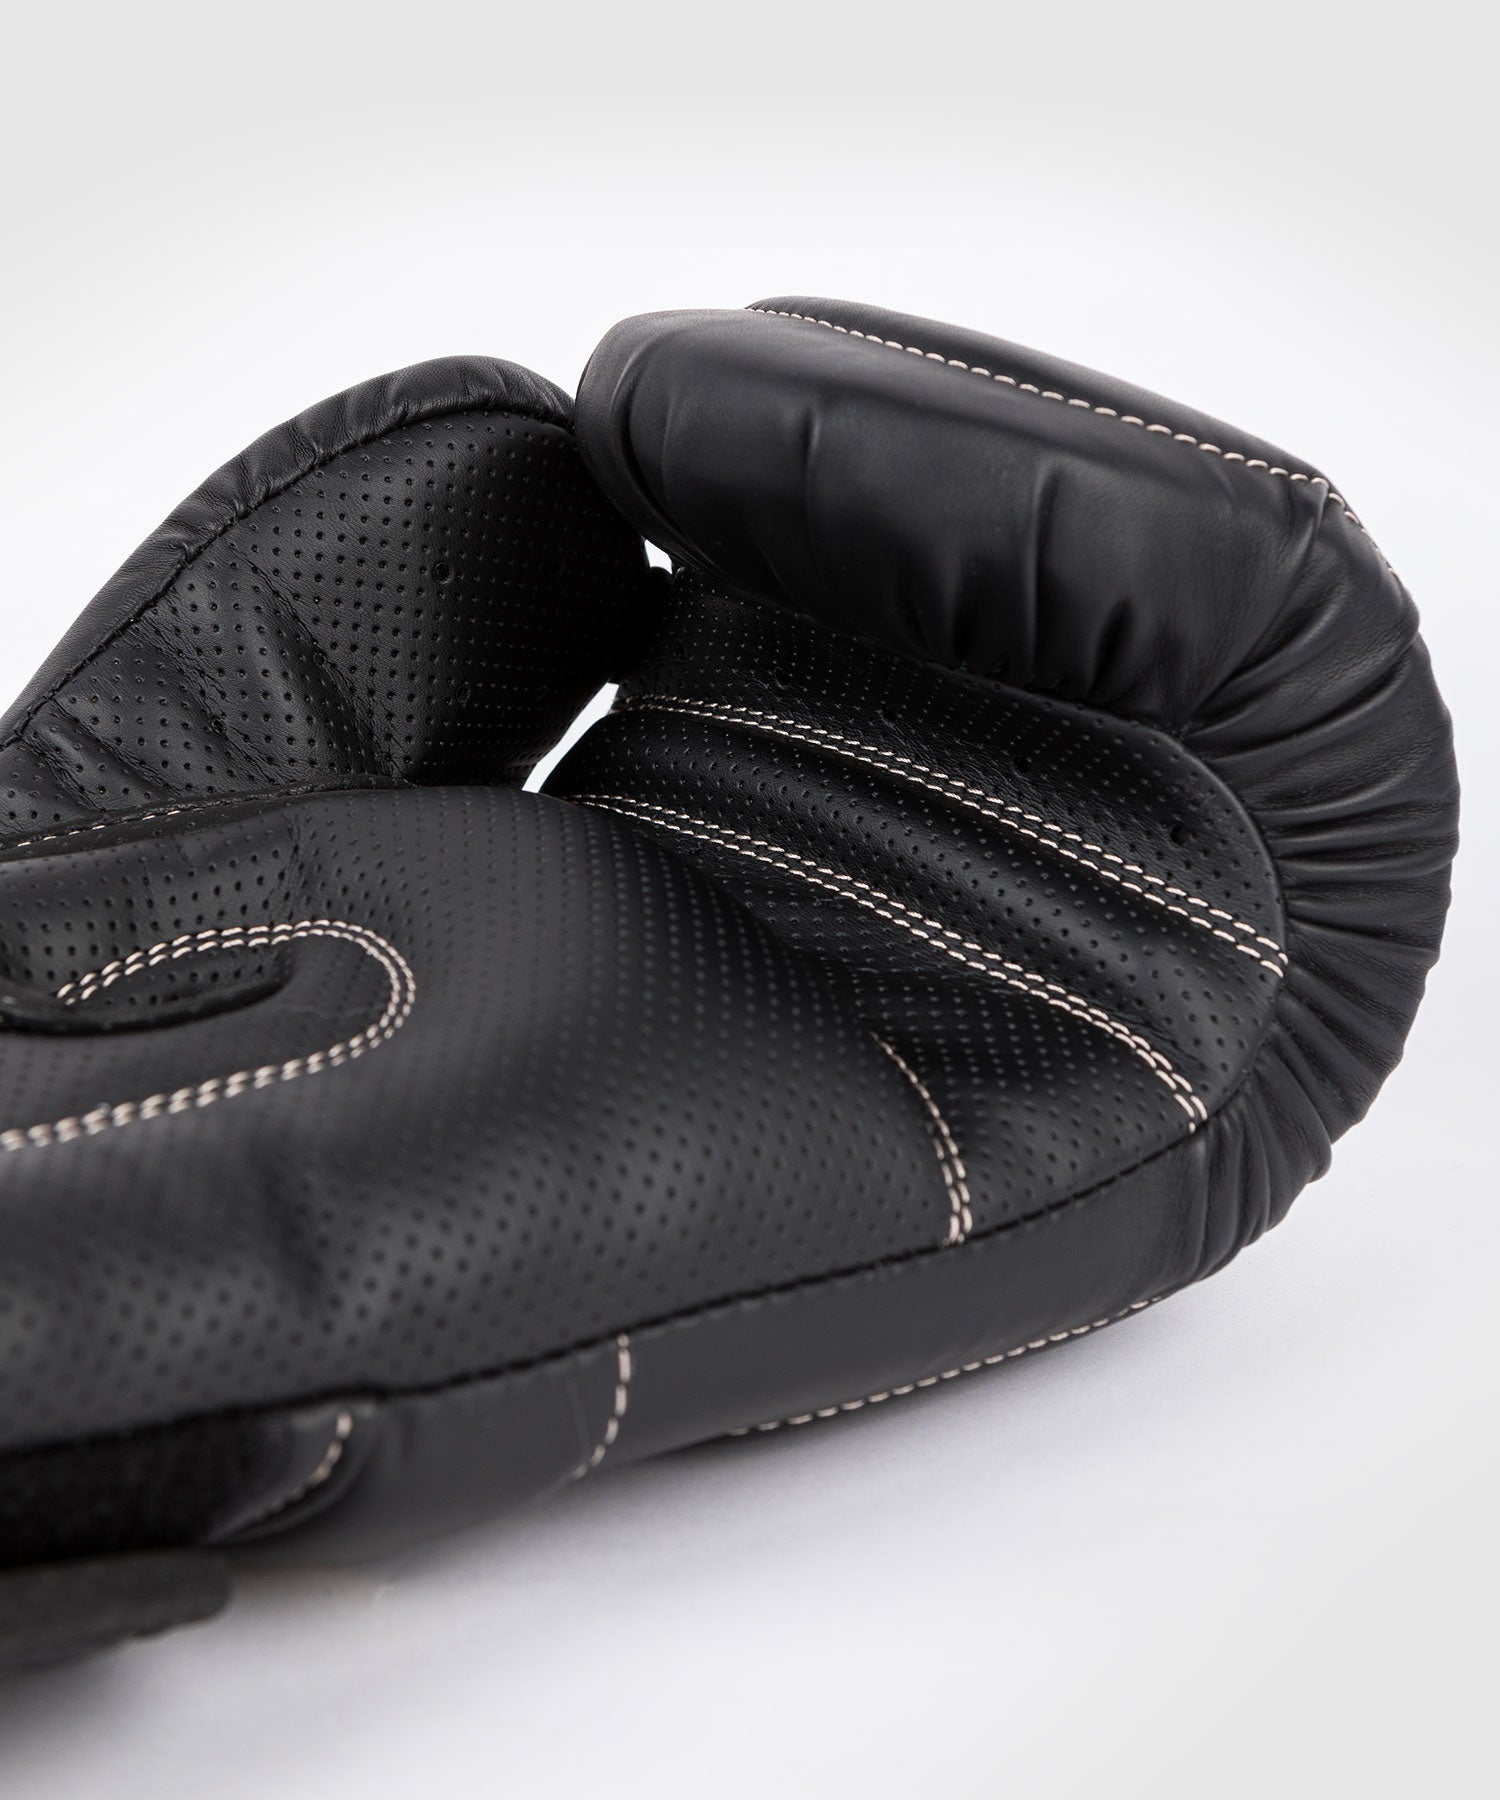 Venum Impact Boxing Gloves - Grey/Black